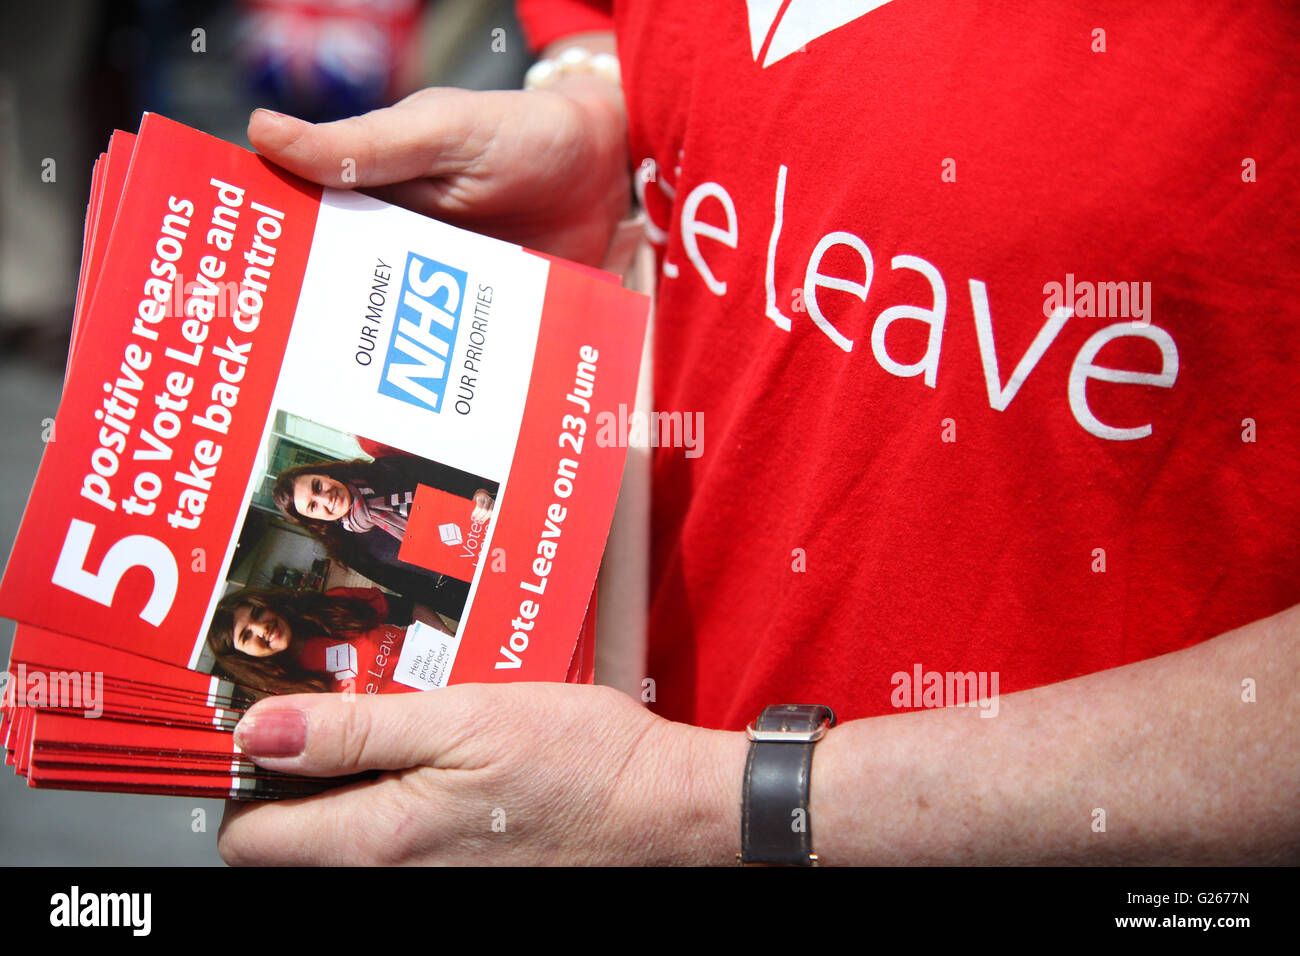 Sloane Square, London, UK 24. Mai 2016 - Abstimmung verlassen Kampagne Broschüre Credit: Dinendra Haria/Alamy Live News Stockfoto